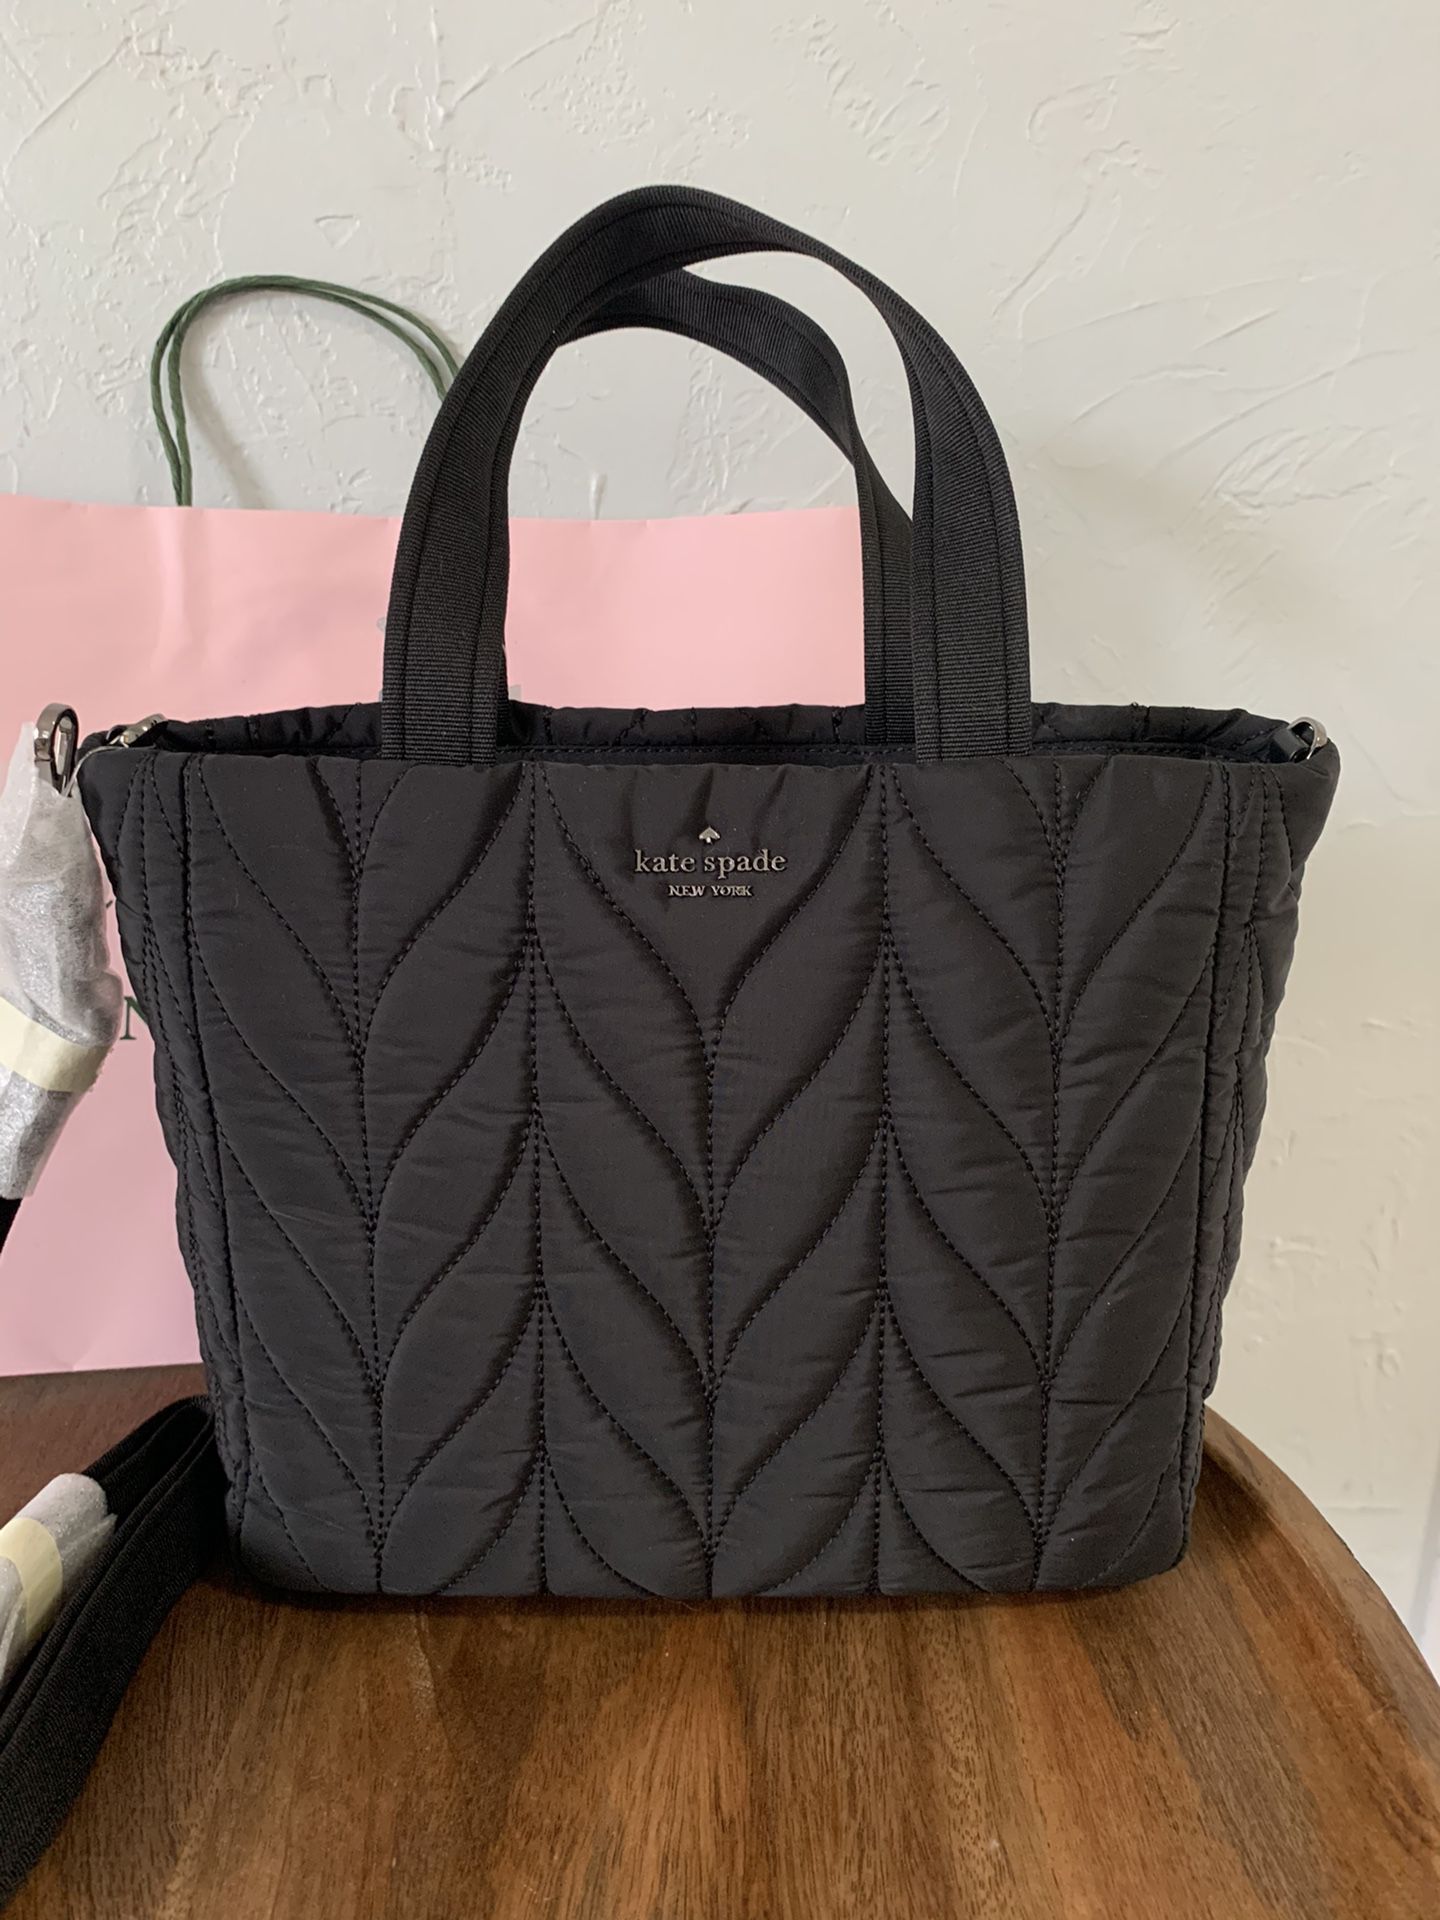 Kate Spade Brand New Black Cloth Bag